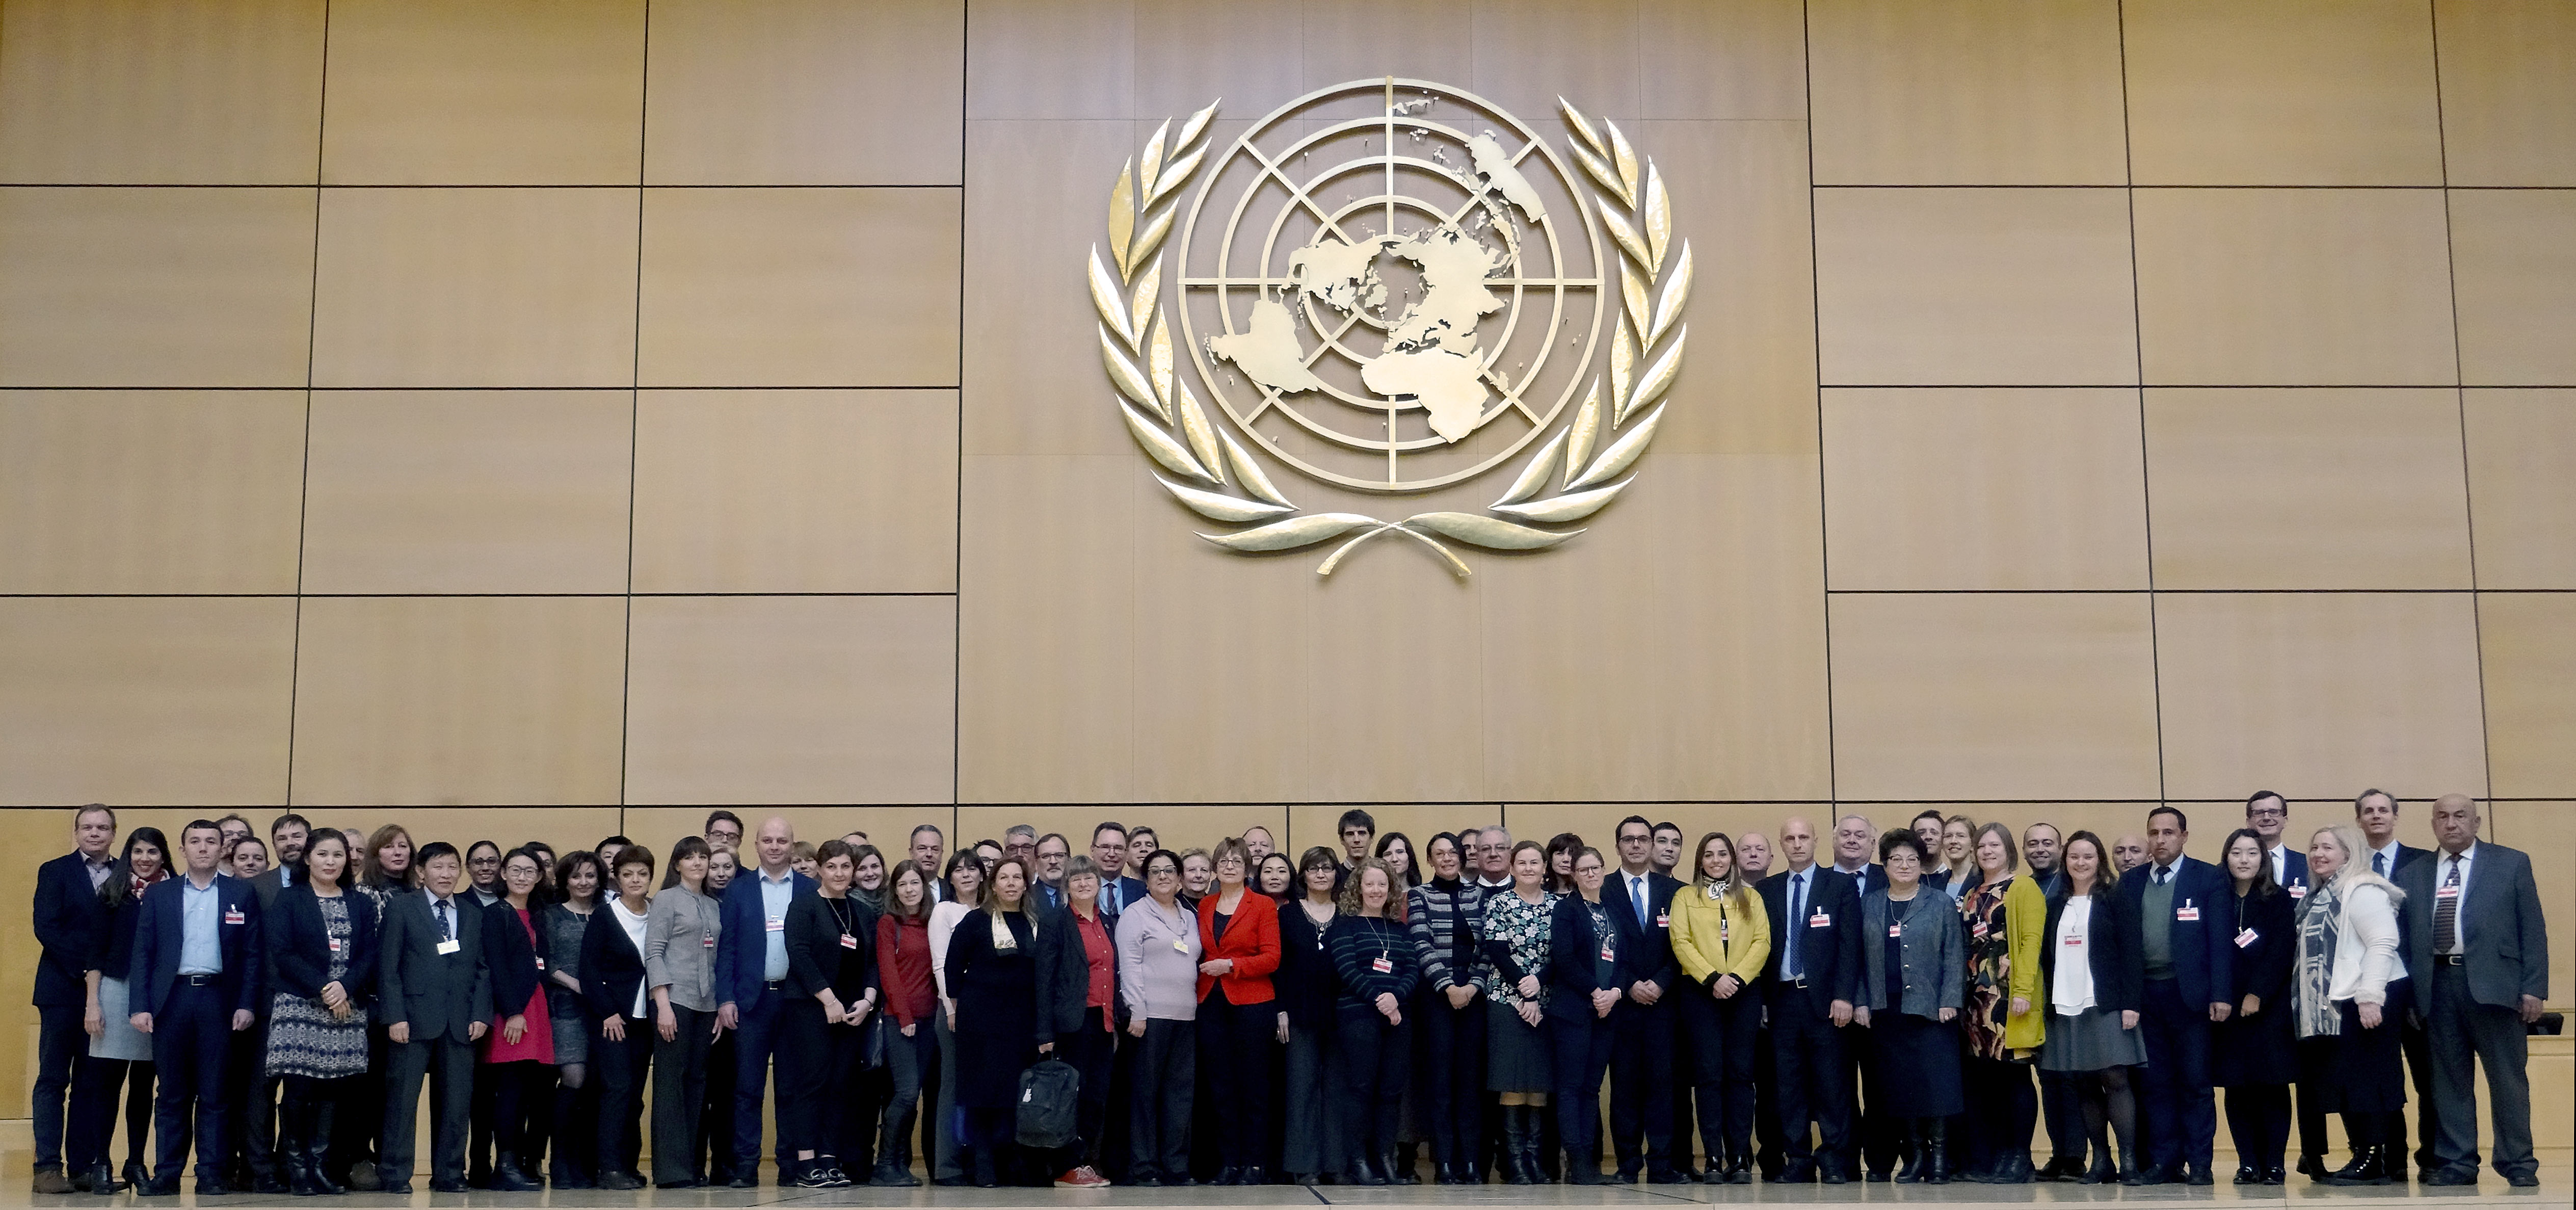 21-22 February 2018 | Joint OECD/UNECE Seminar on SEEA Implementation